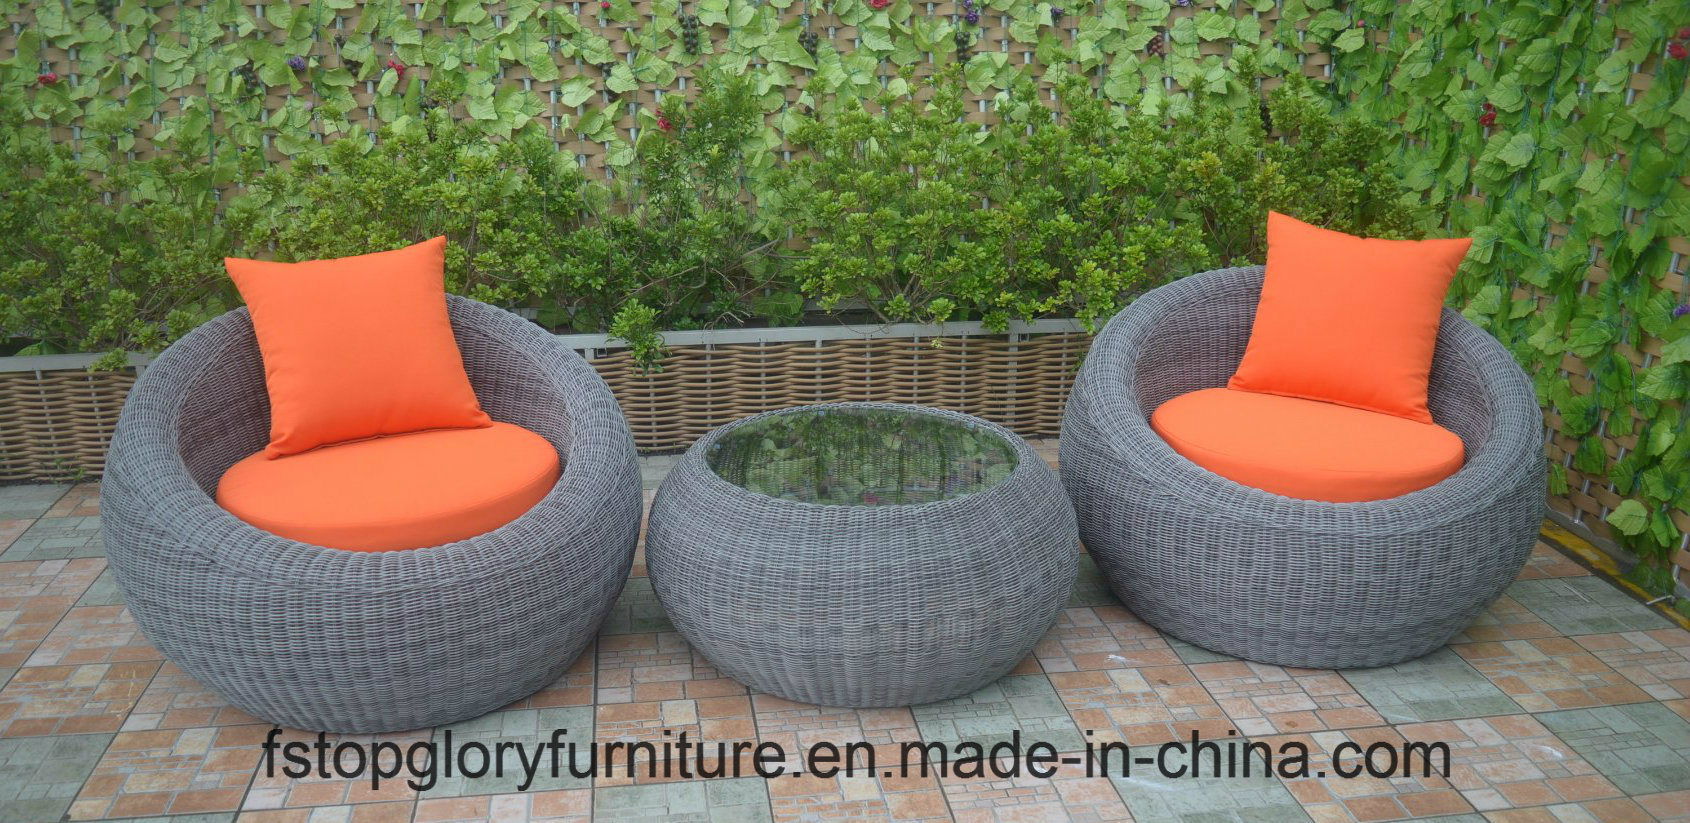 New Design Aluminum Frame Outdoor Sofa Set Rattan Furniture (TG-821C)